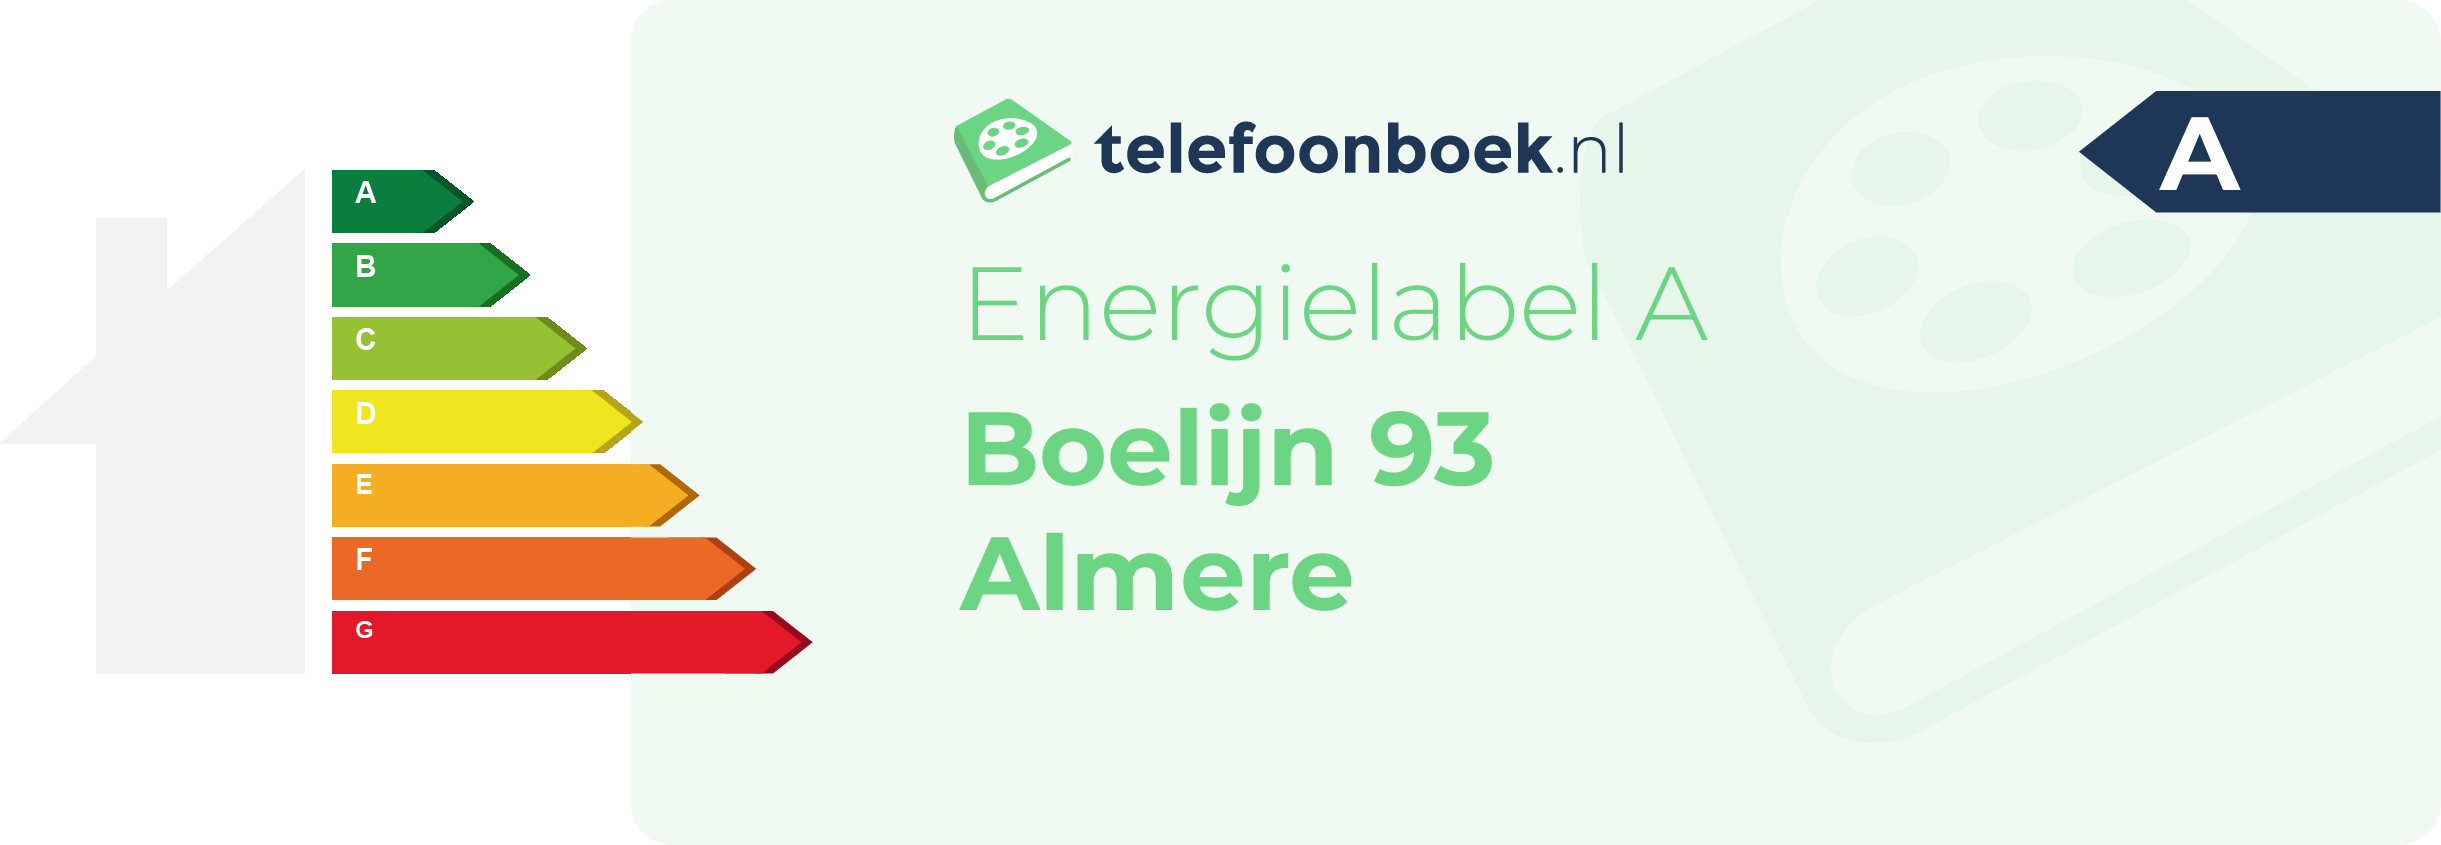 Energielabel Boelijn 93 Almere